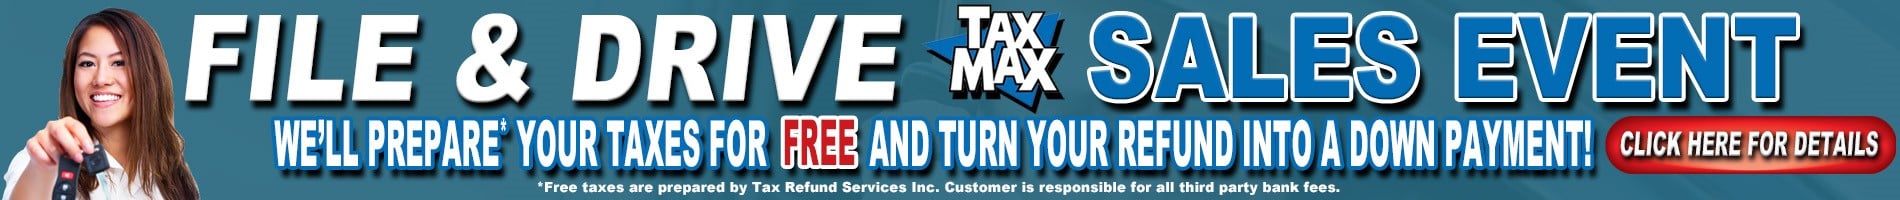 Tax Max Banner